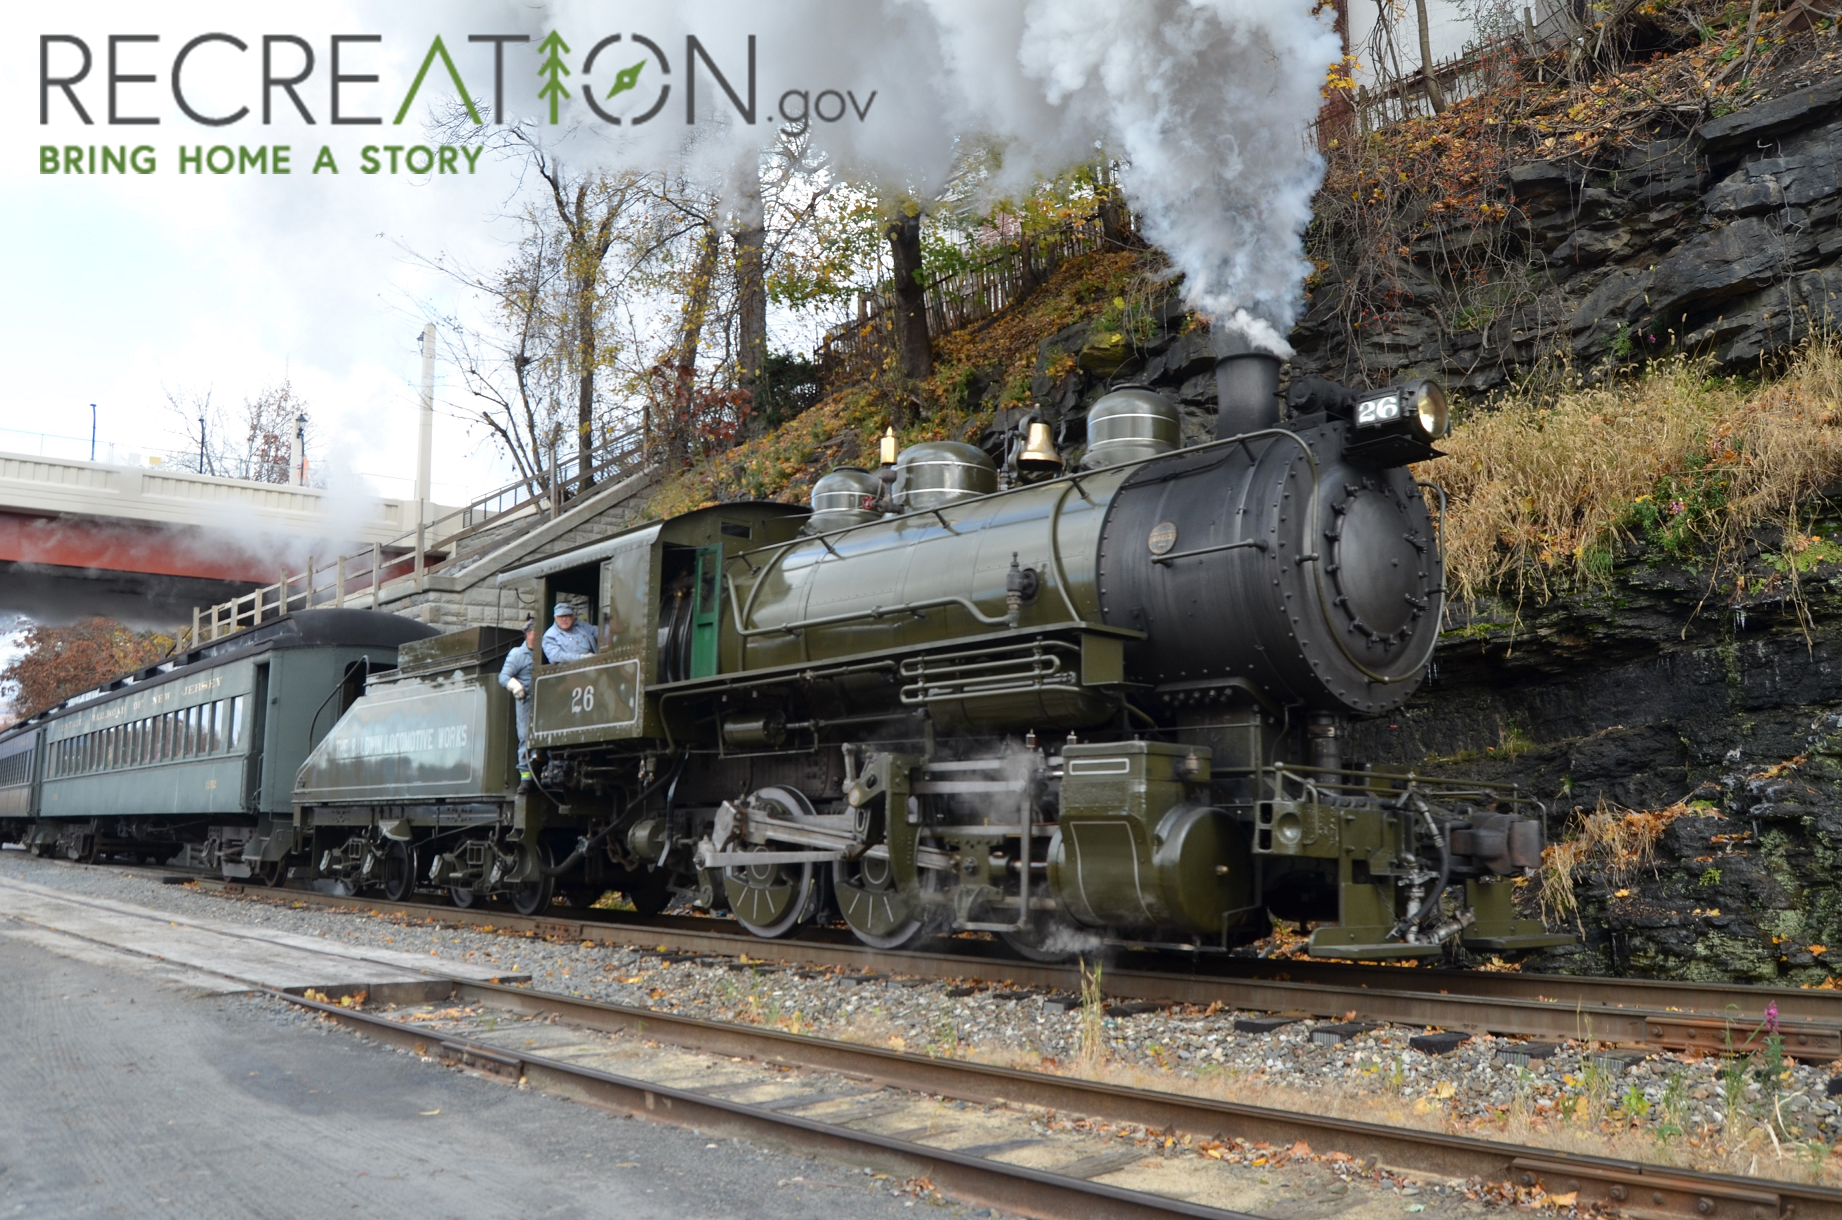 steam locomotive on tracks and recreation.gov logo in upper left corner